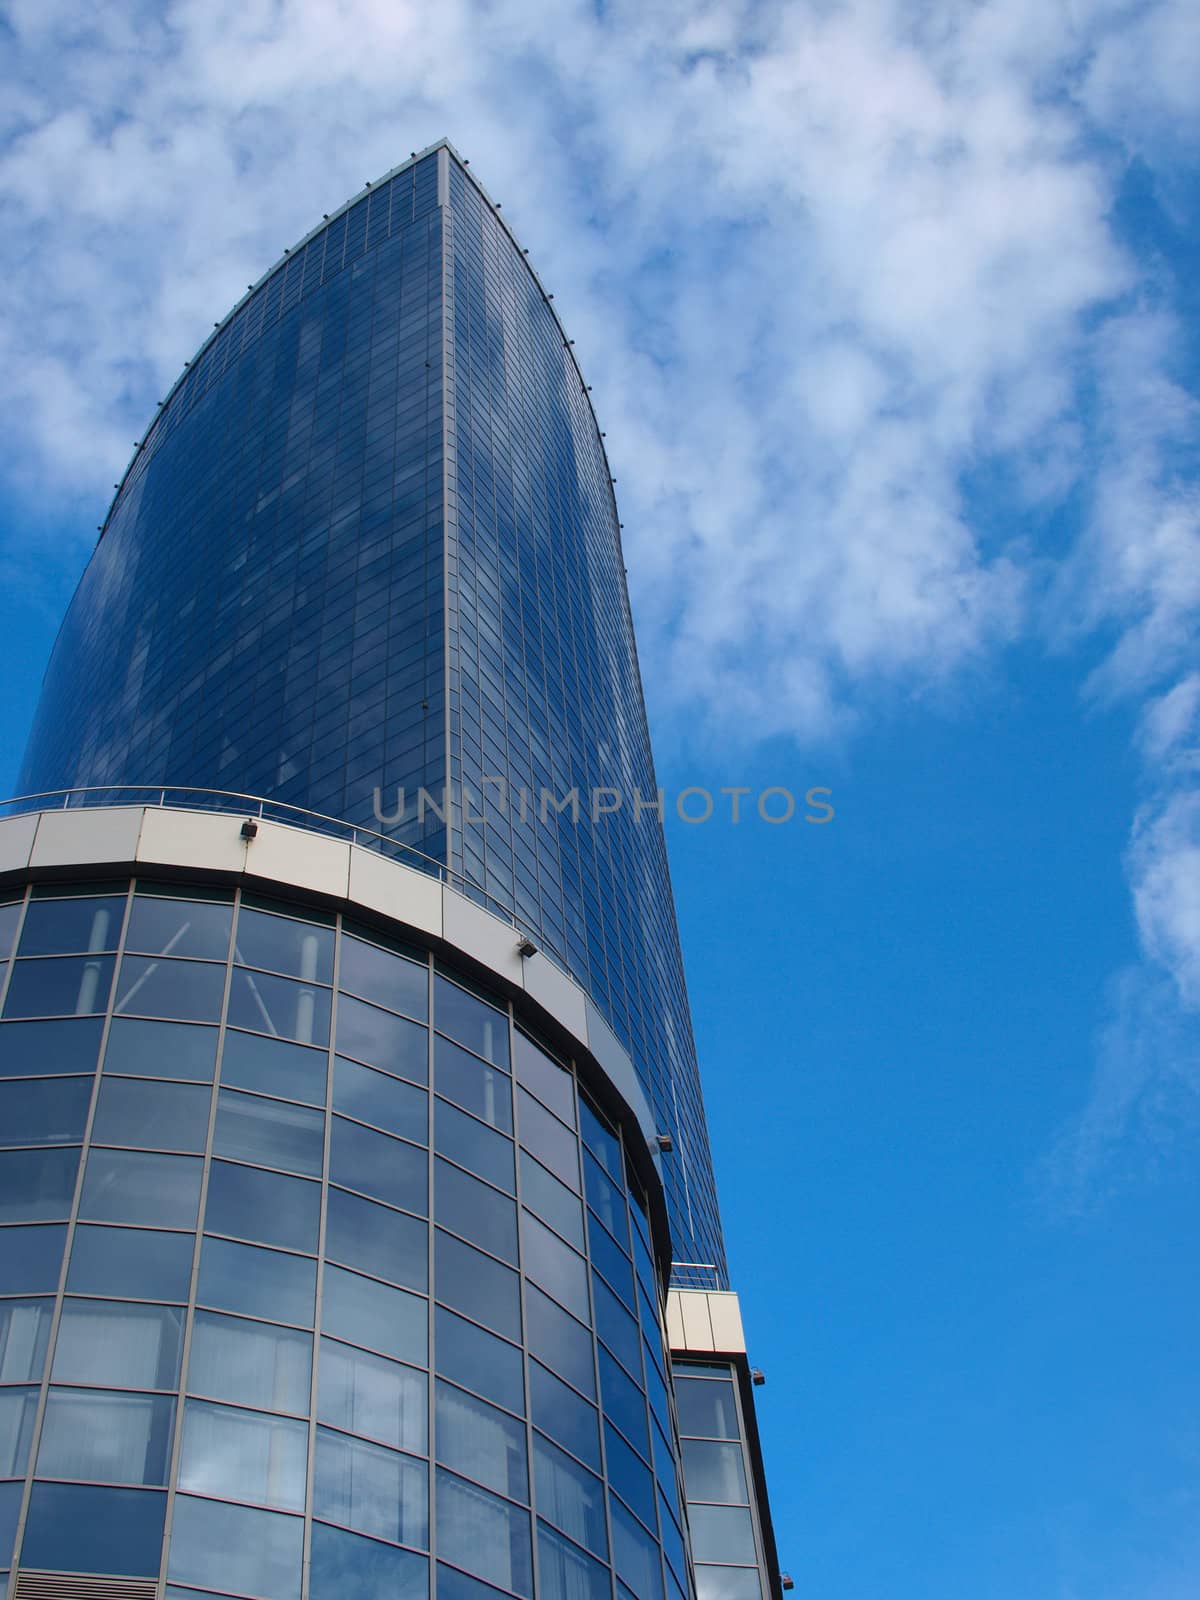 A skyscraper made of glass and concrete